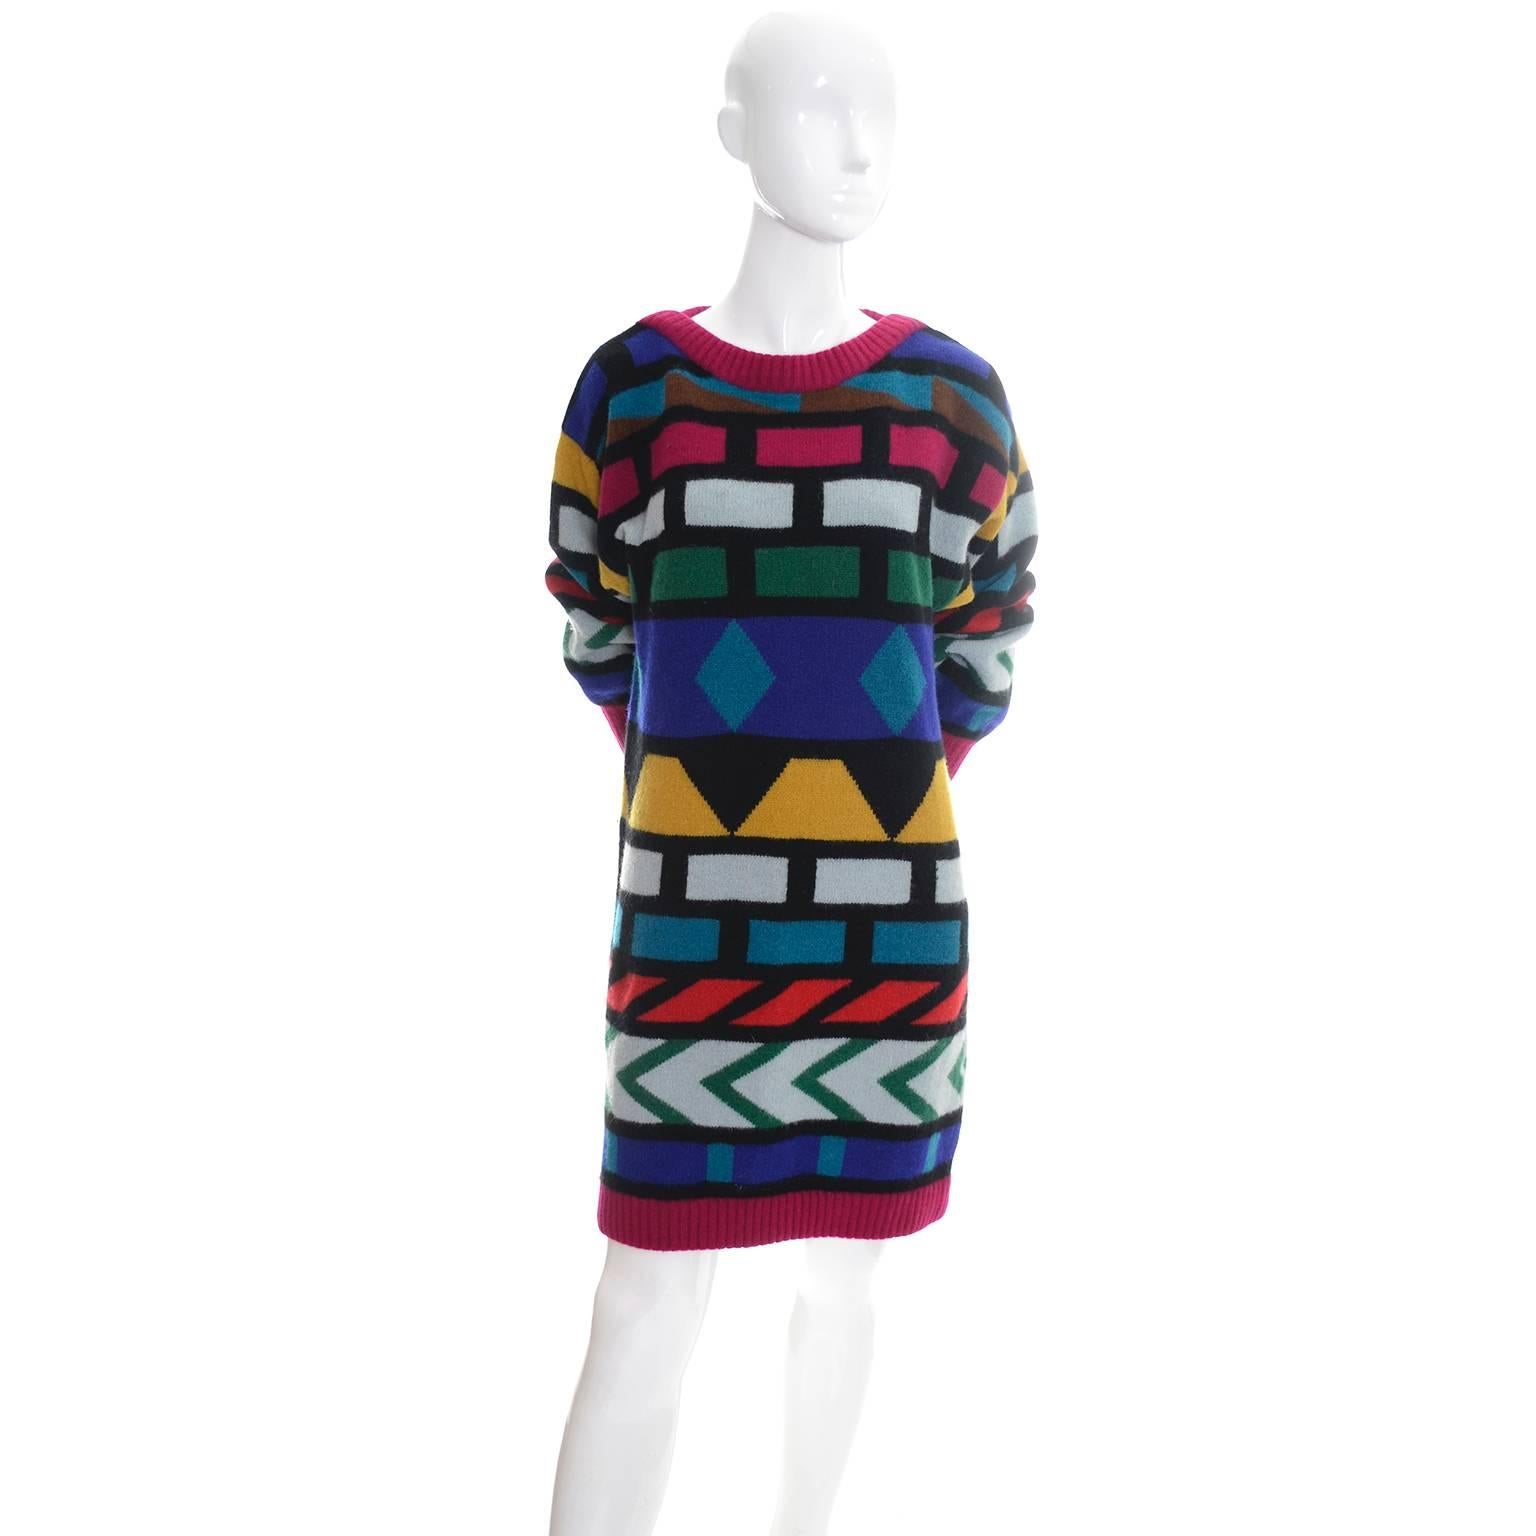 1980s sweater dress